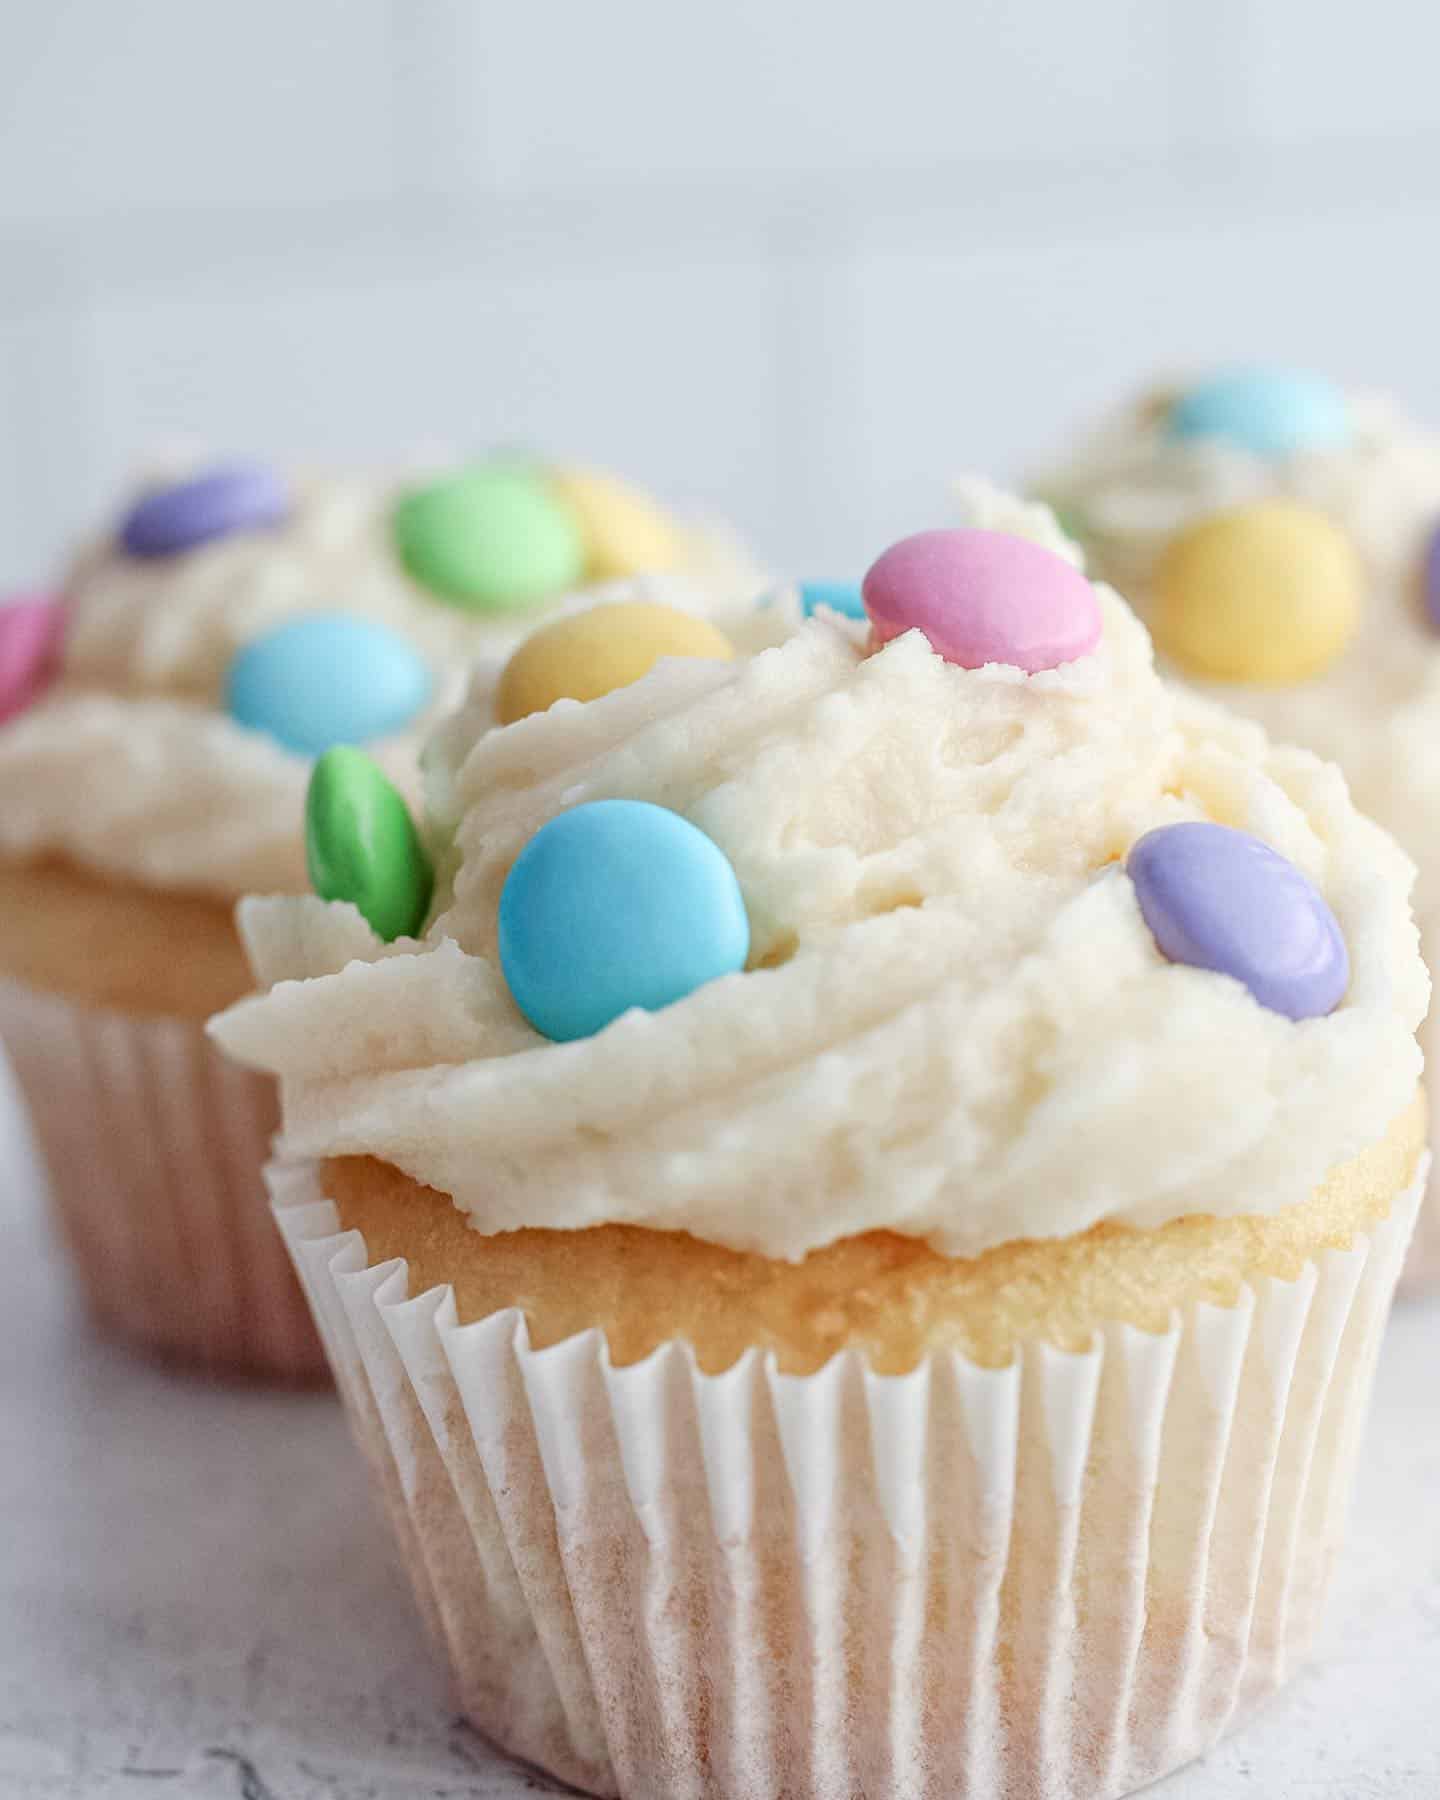 Happy Easter everyone! 

#eastercupcakes #easterbaking #baking #cupcakes #cupcakesofinstagram